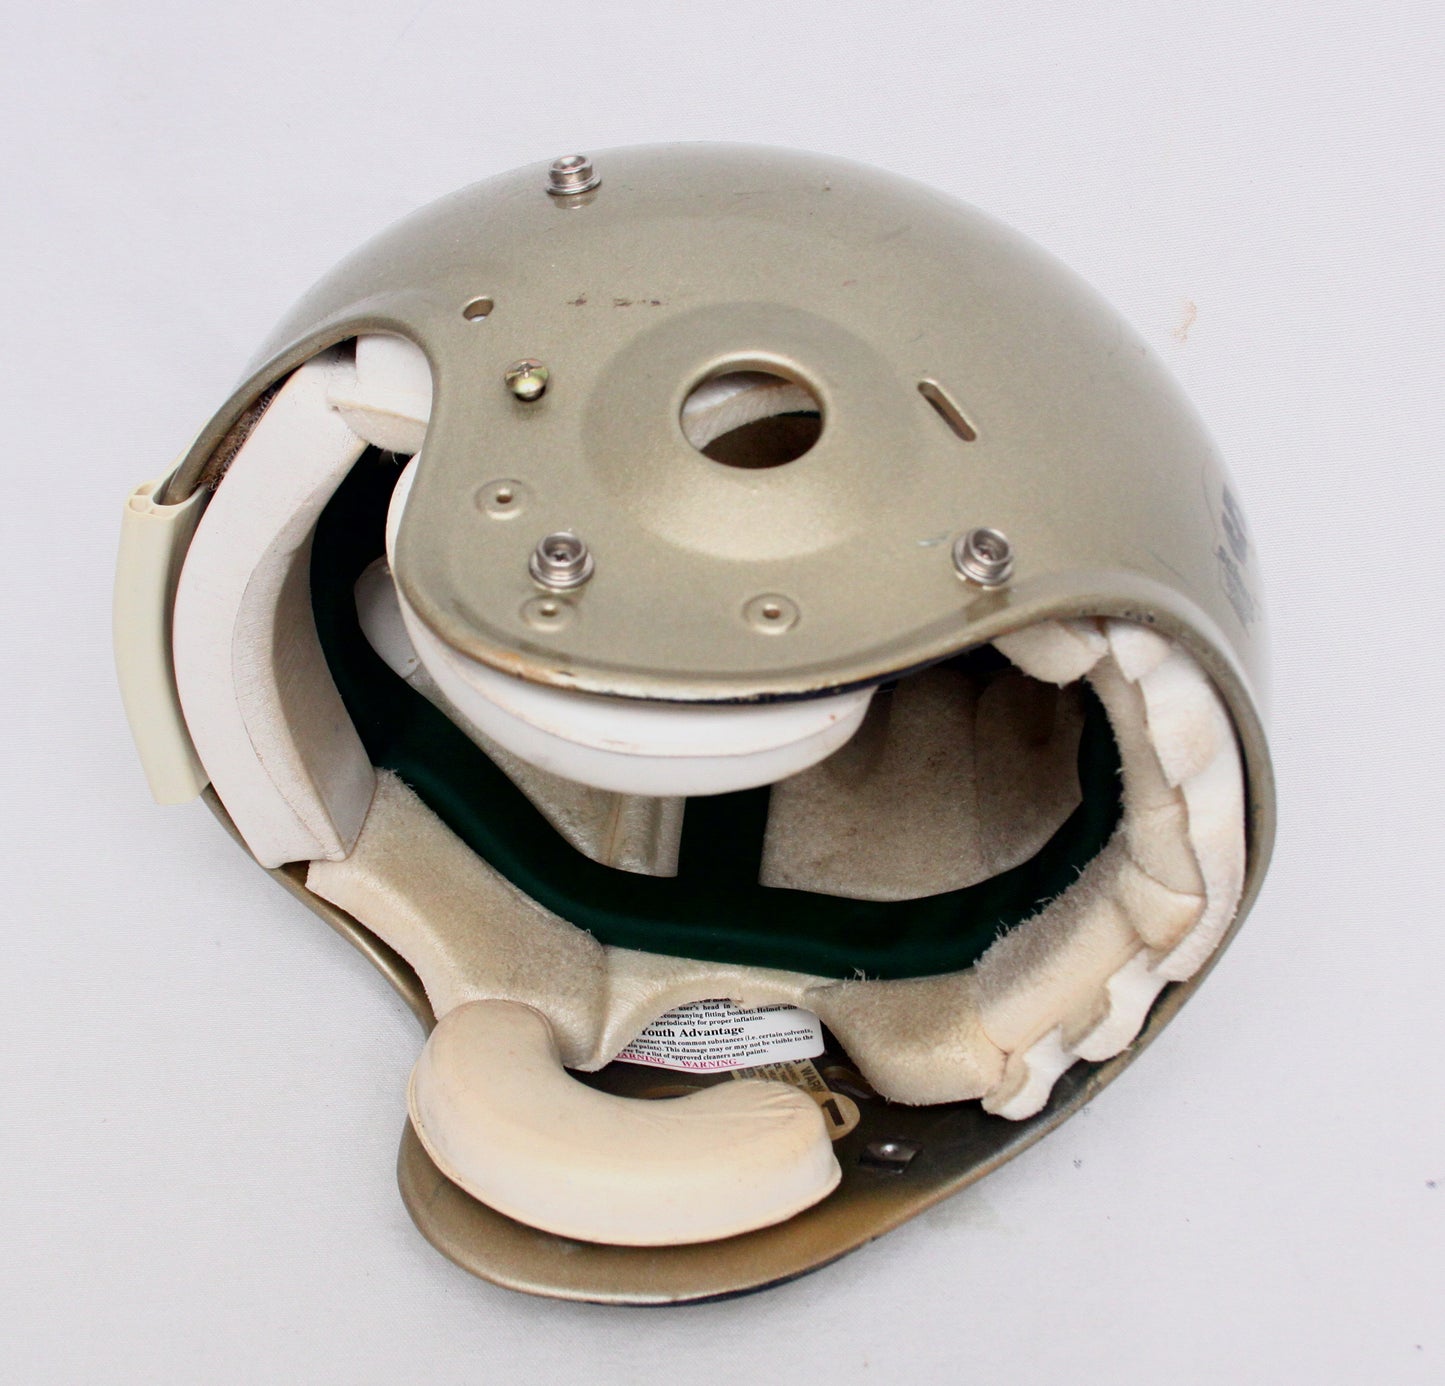 Pre-owned Schutt Air Advantage Youth Large Gold Metallic Football Helmet